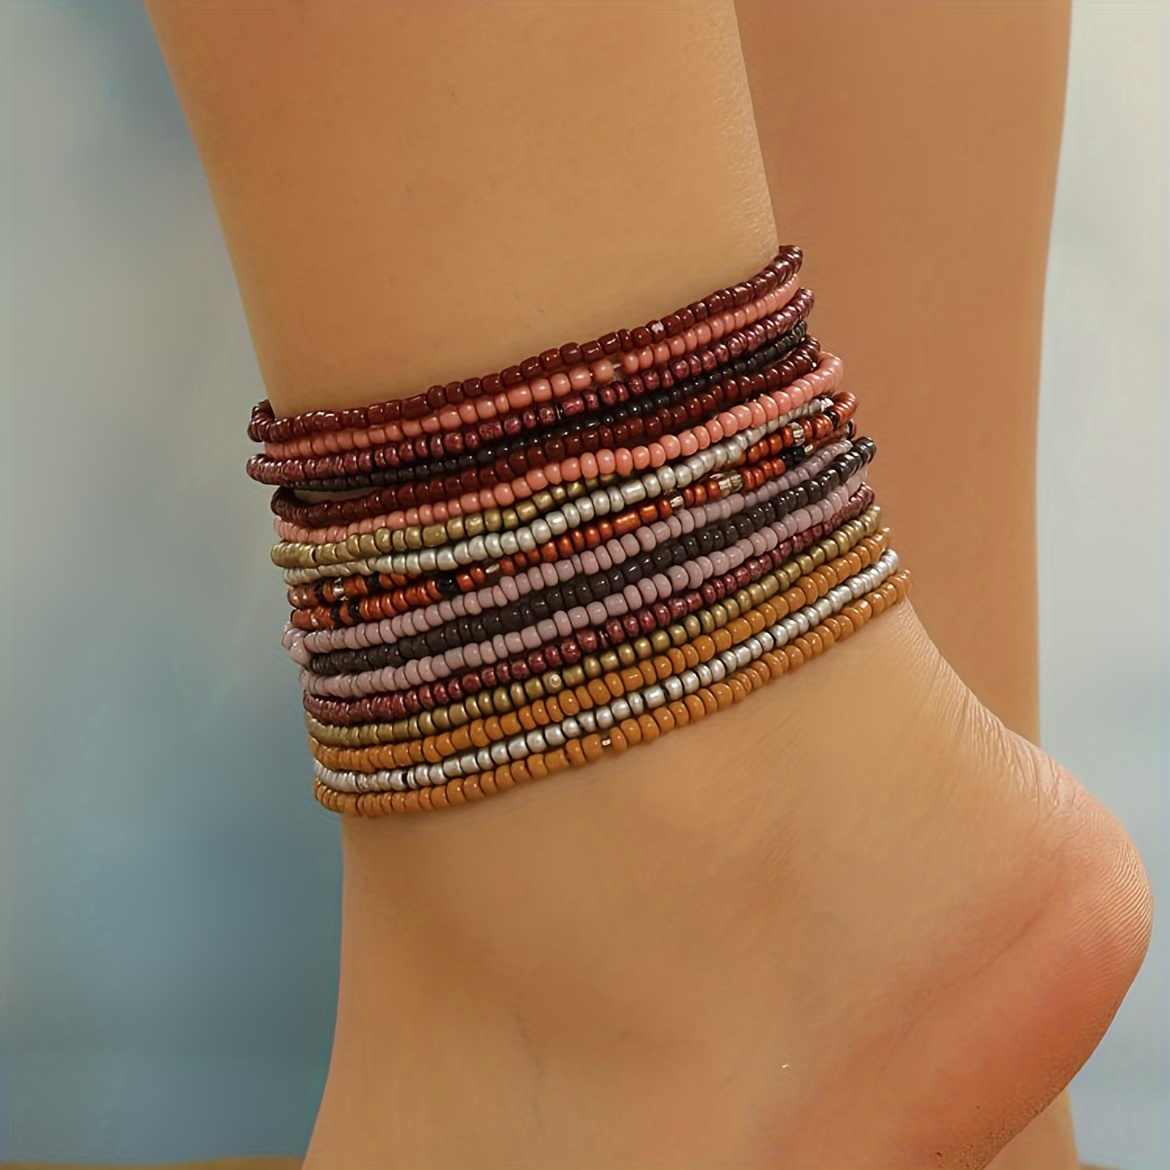 

18pcs Multicolor Beaded Elastic Ankle Bracelet Set, Bohemian & Minimalist Style, Brown Color Tone, Women's Beach Party Jewelry